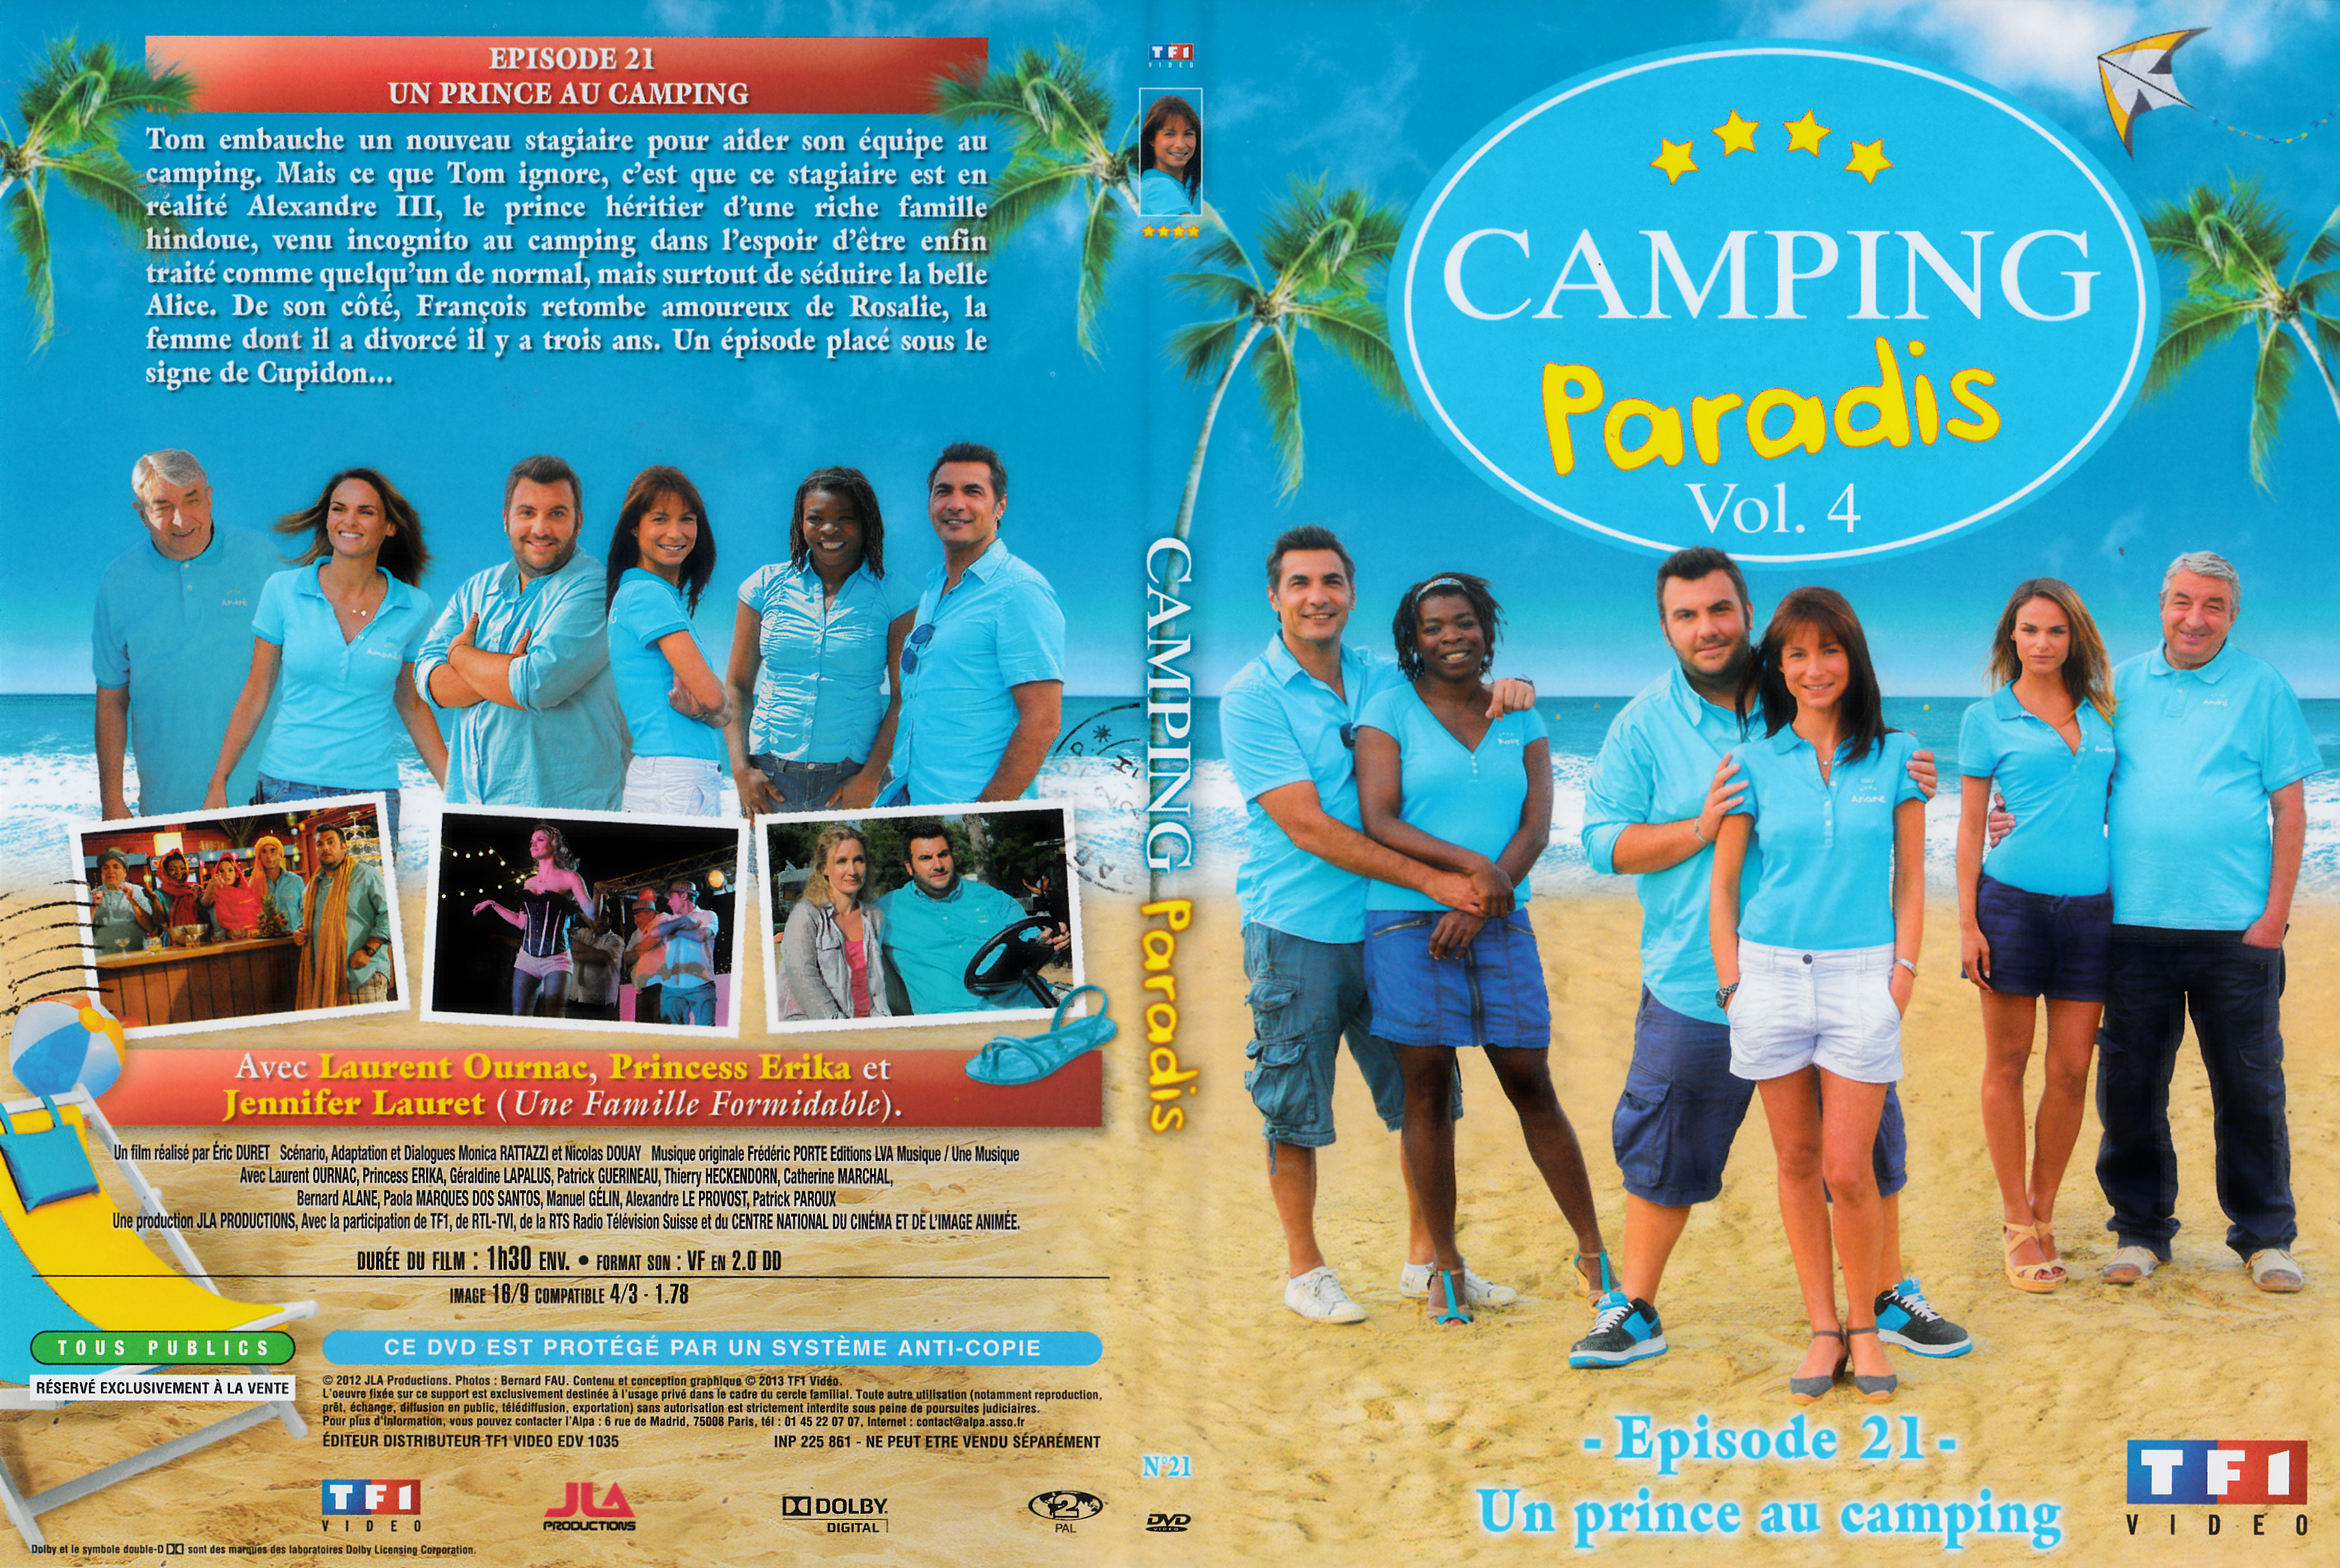 Jaquette DVD Camping Paradis vol 21